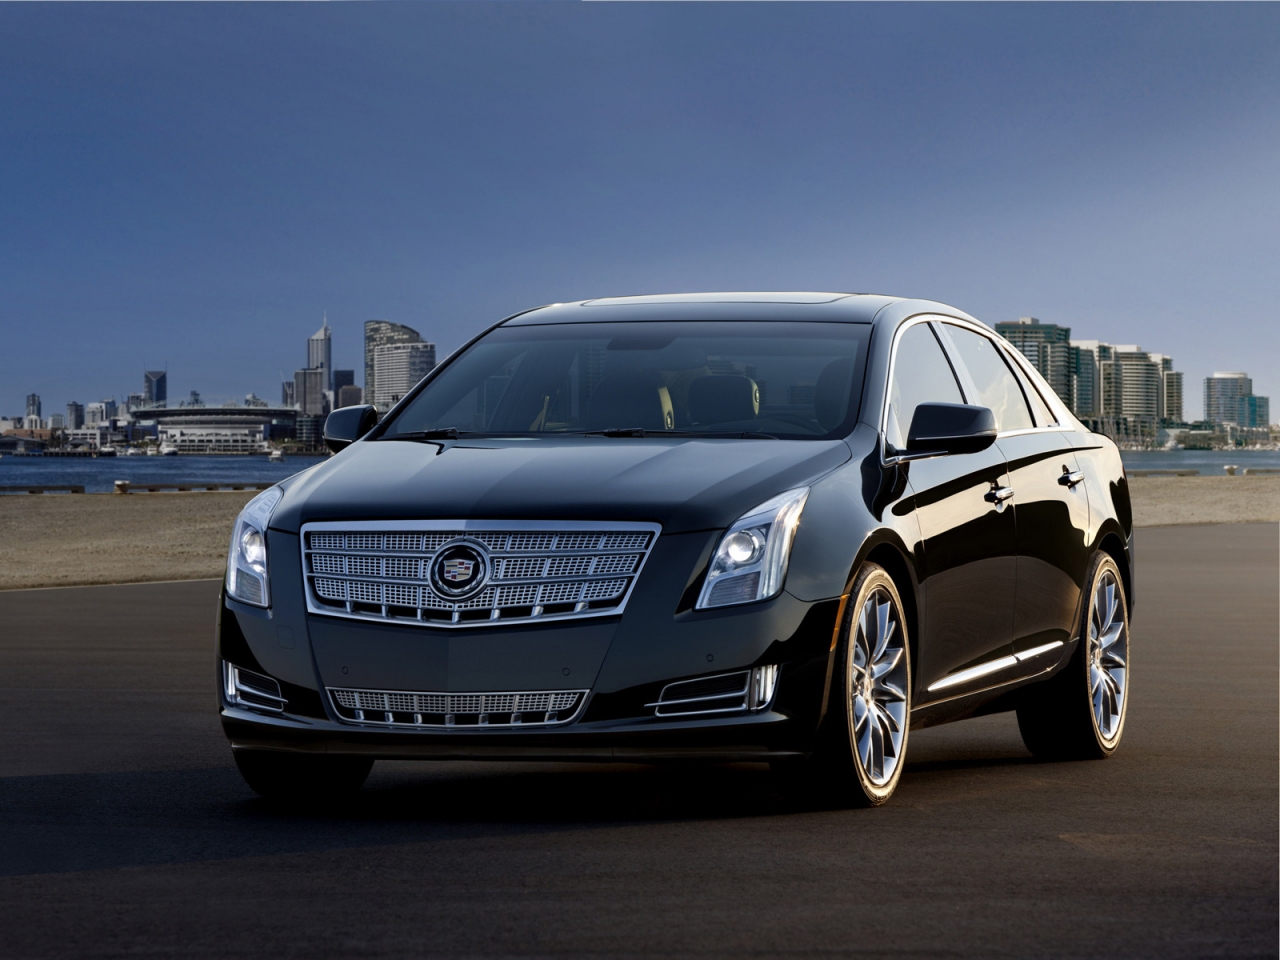 2013 Cadillac XTS for 1280 x 960 resolution